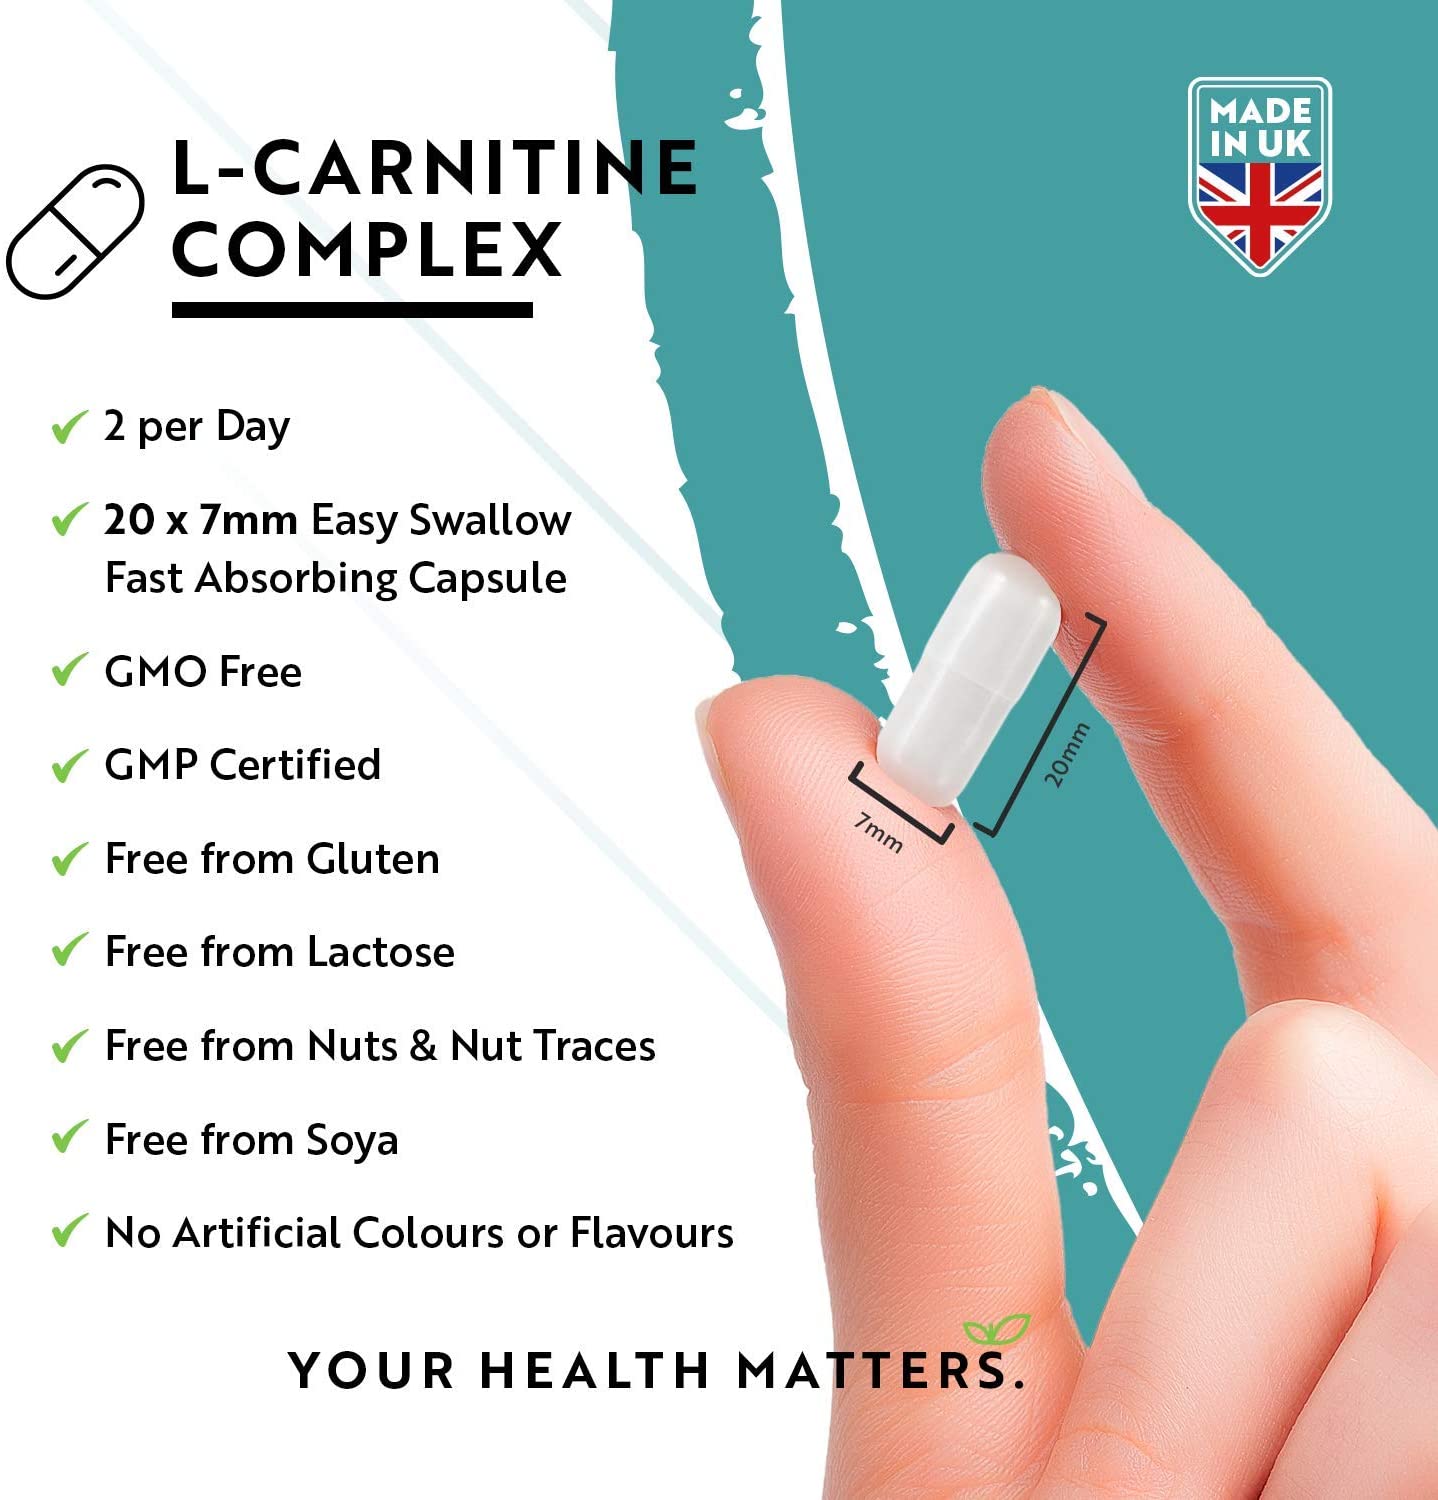 L-Carnitine Complex 150 Vegan Capsules